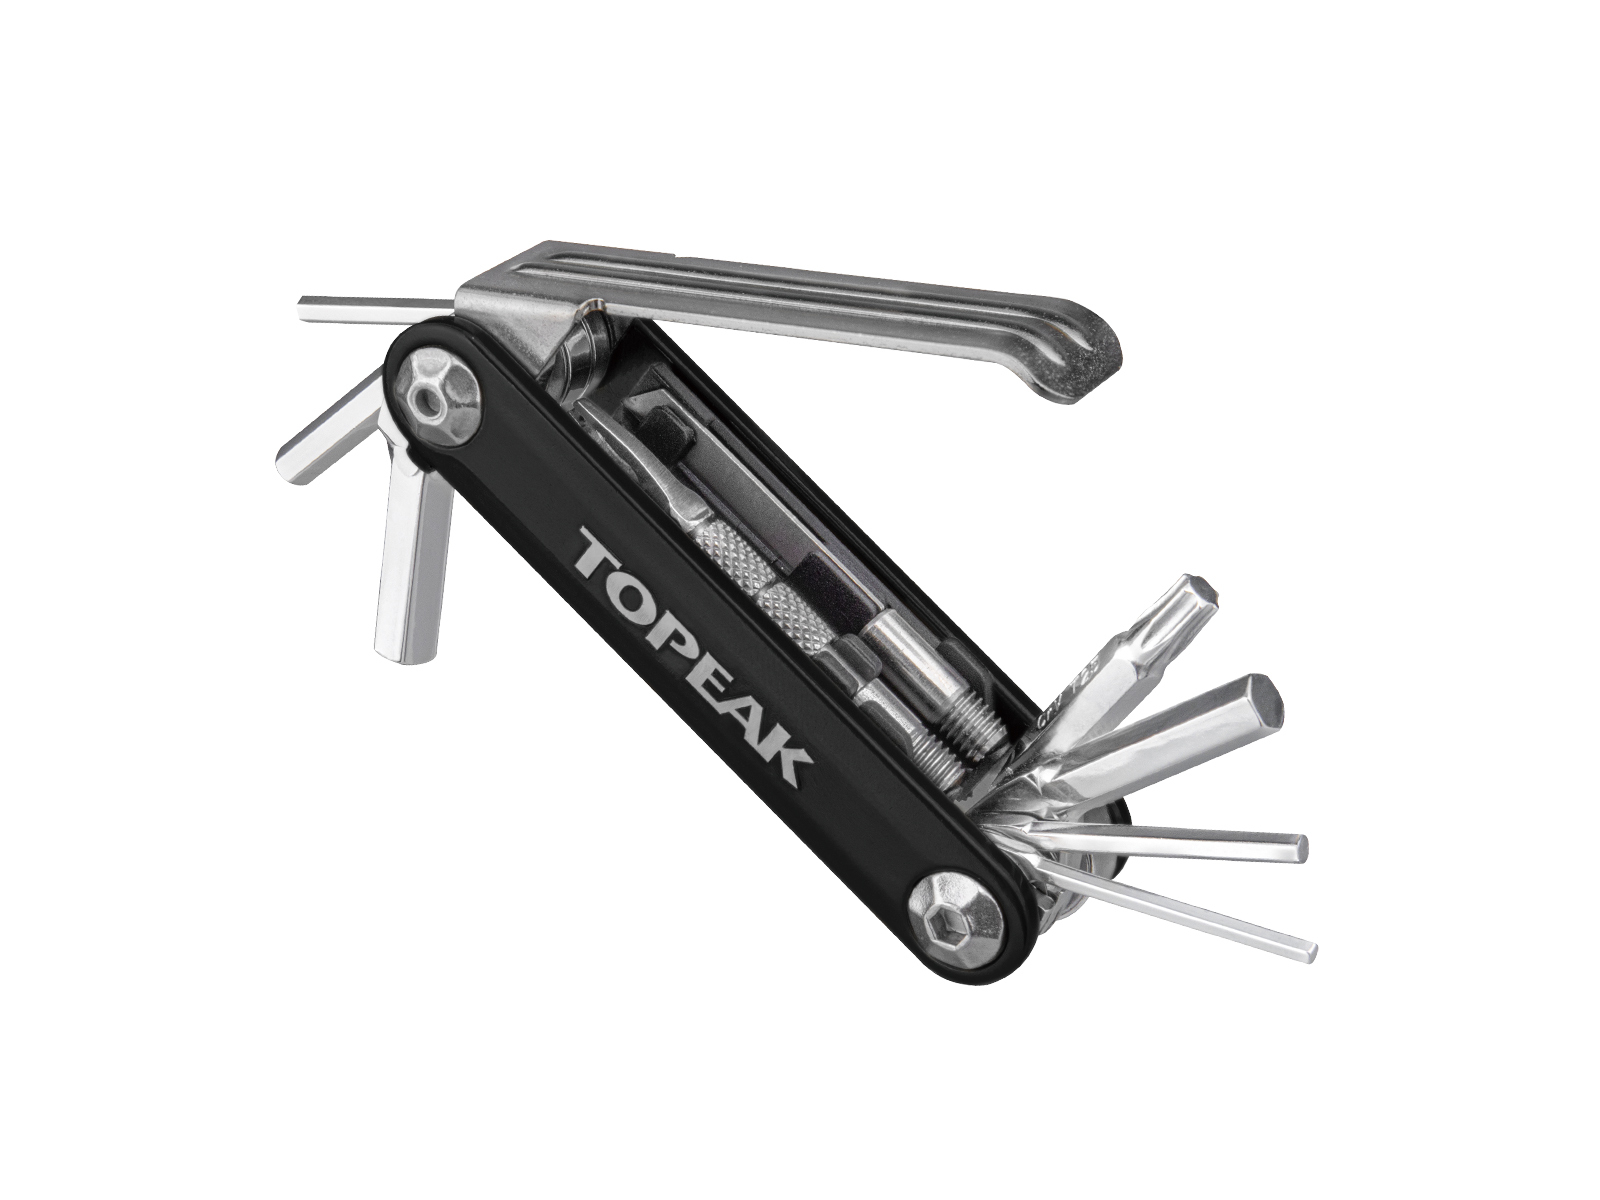 Topeak Tubi - 11 function Precision Mini Tool